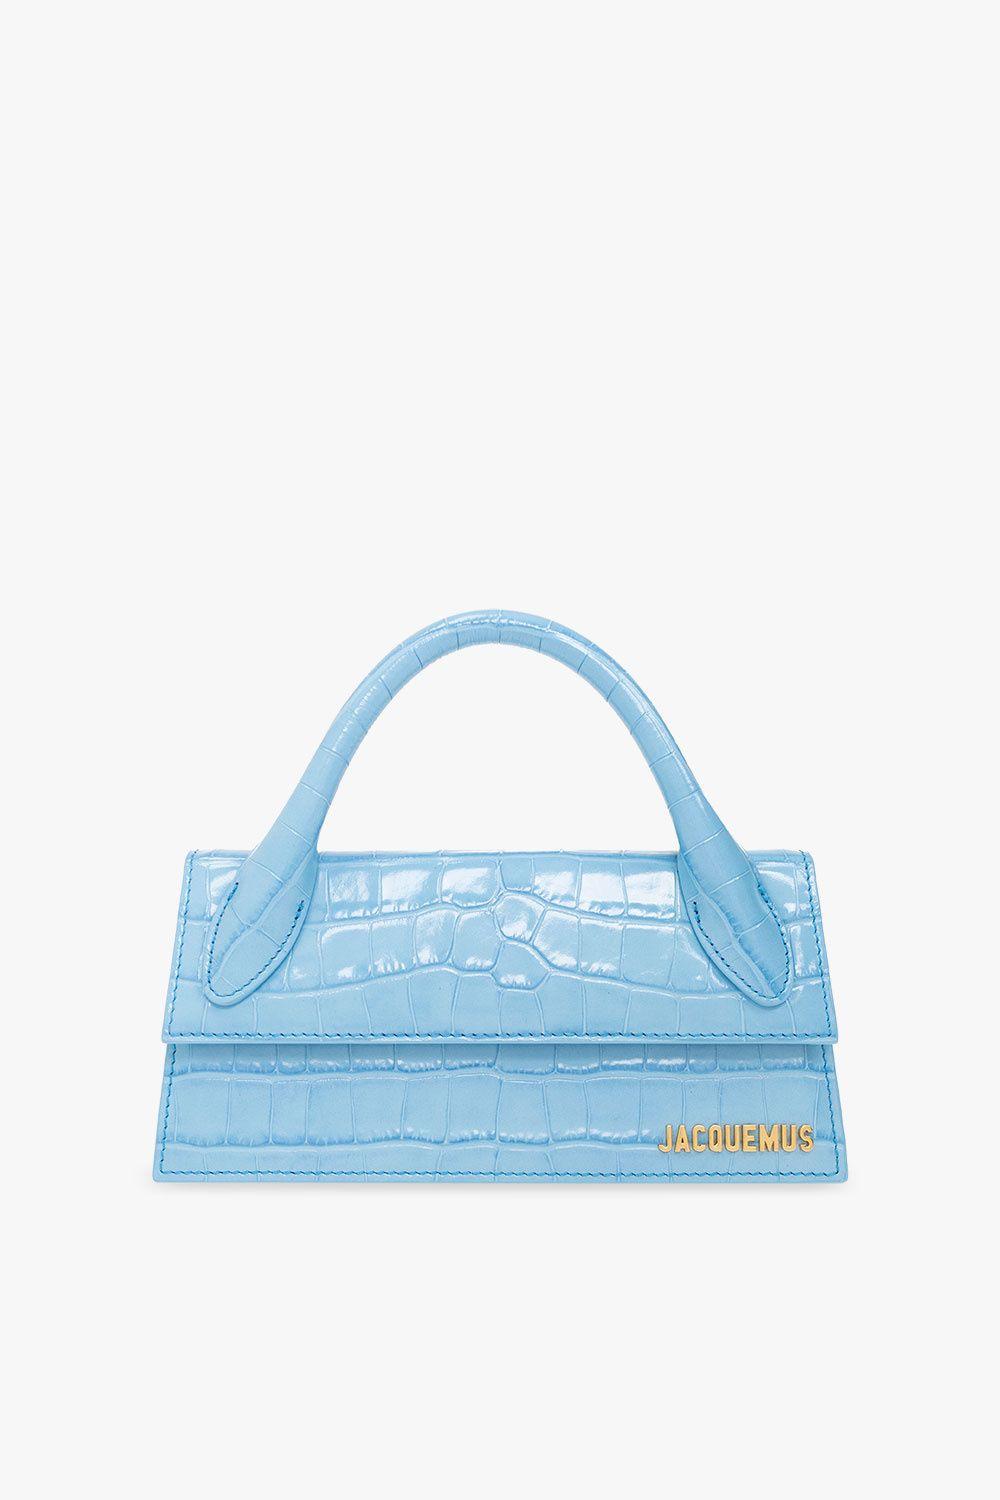 JACQUEMUS Le Chiquito Long Bag in Light Blue